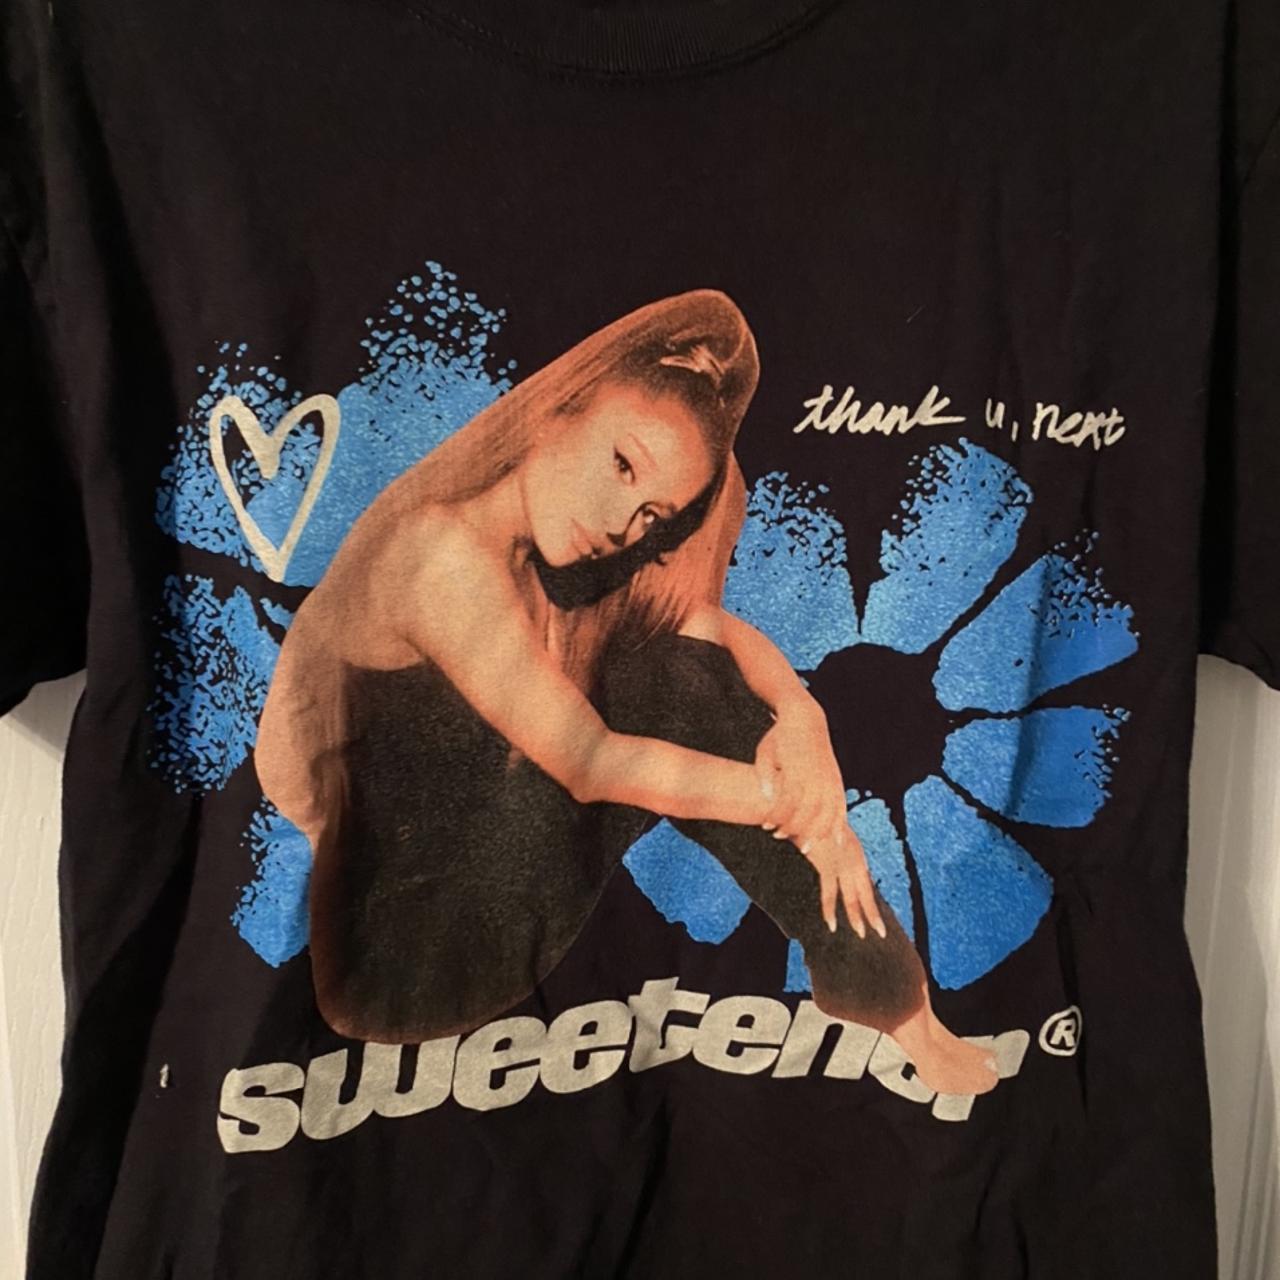 Ariana Grande Sweetener Tour Merch! Includes bag and - Depop